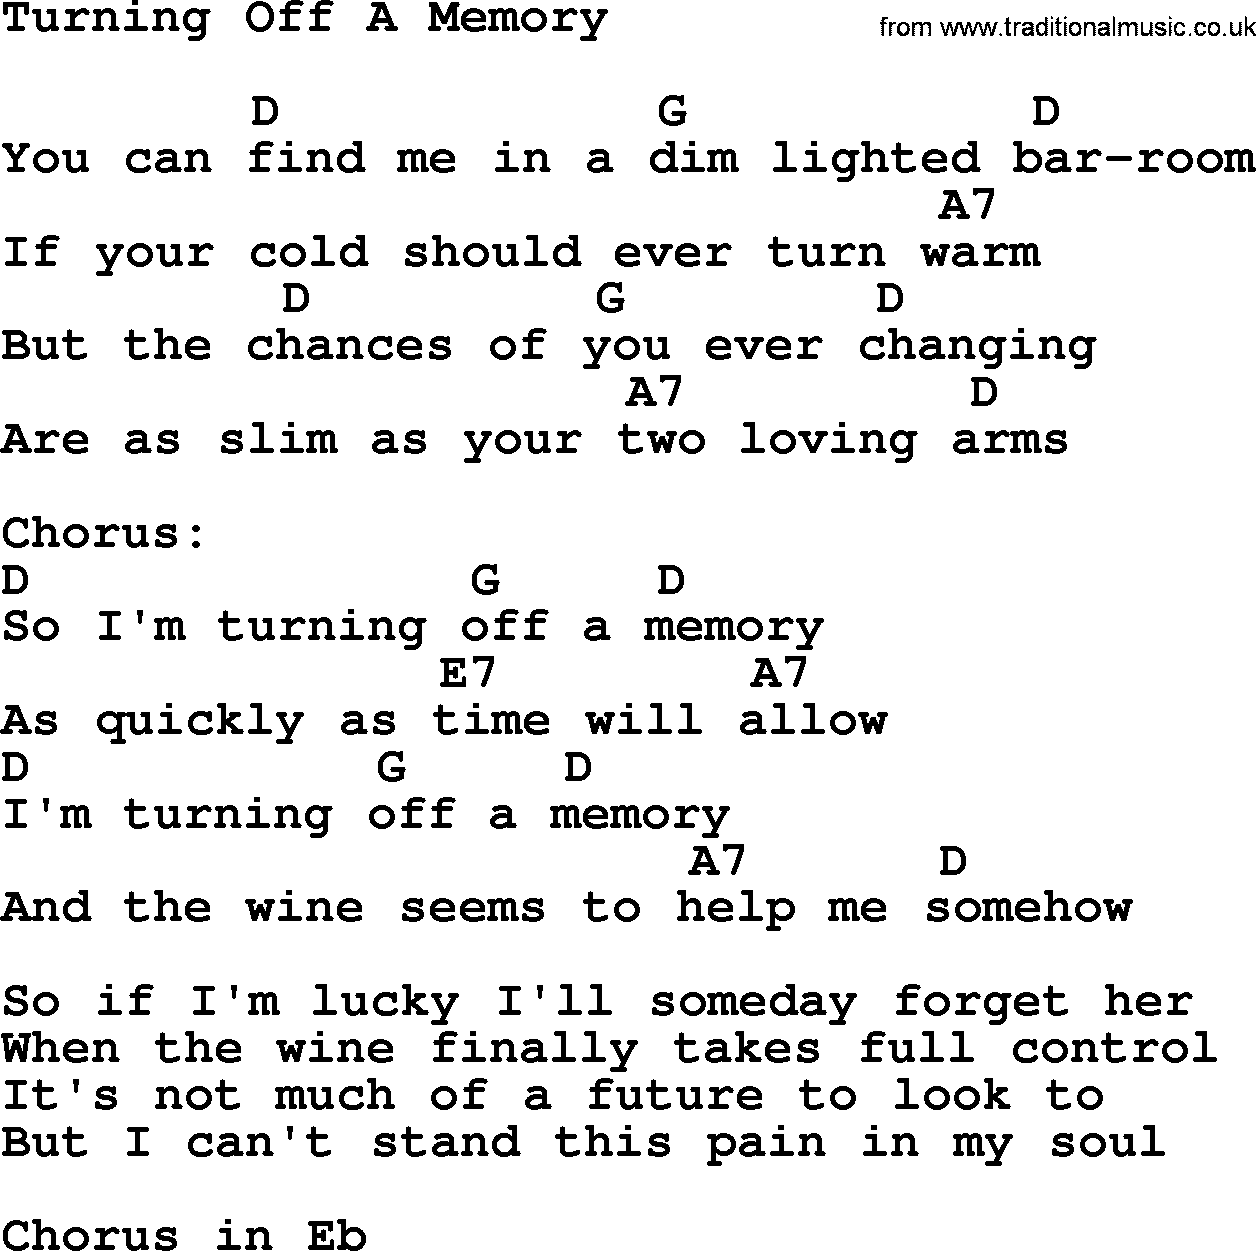 Merle Haggard song: Turning Off A Memory, lyrics and chords